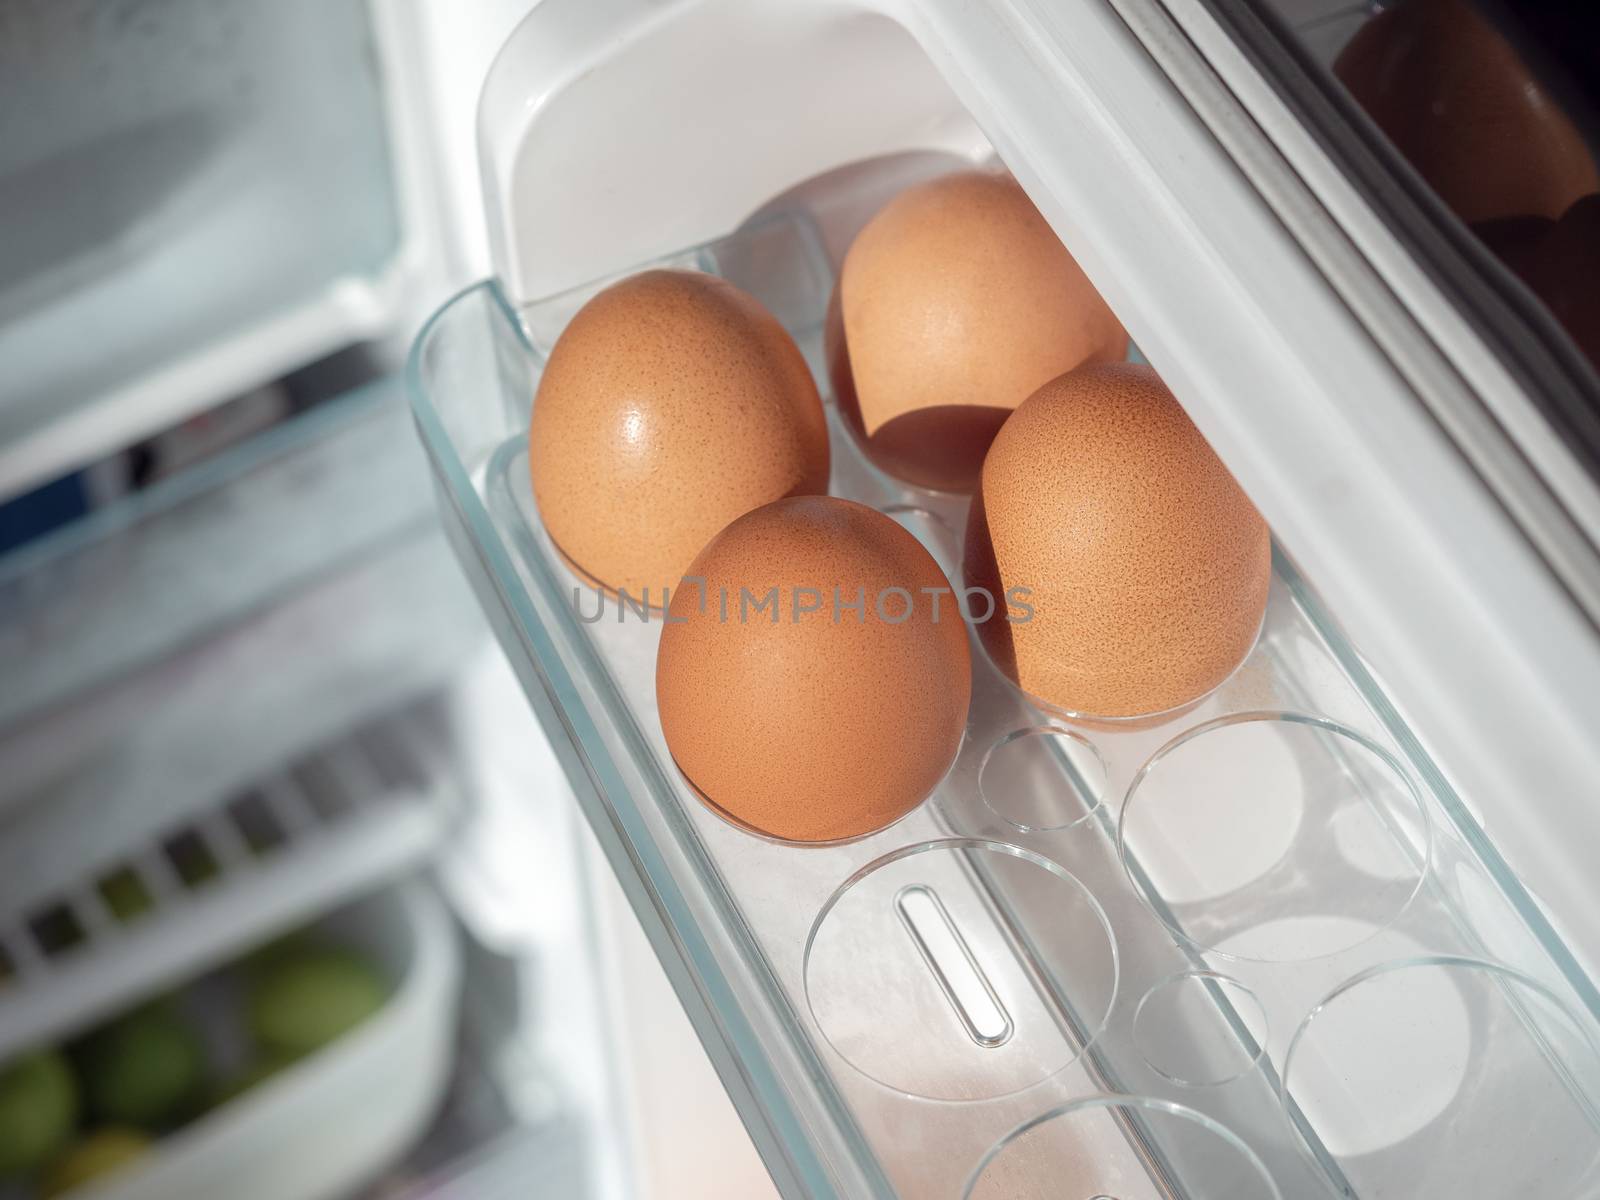 Chicken eggs on shelf of refrigerator. by tete_escape